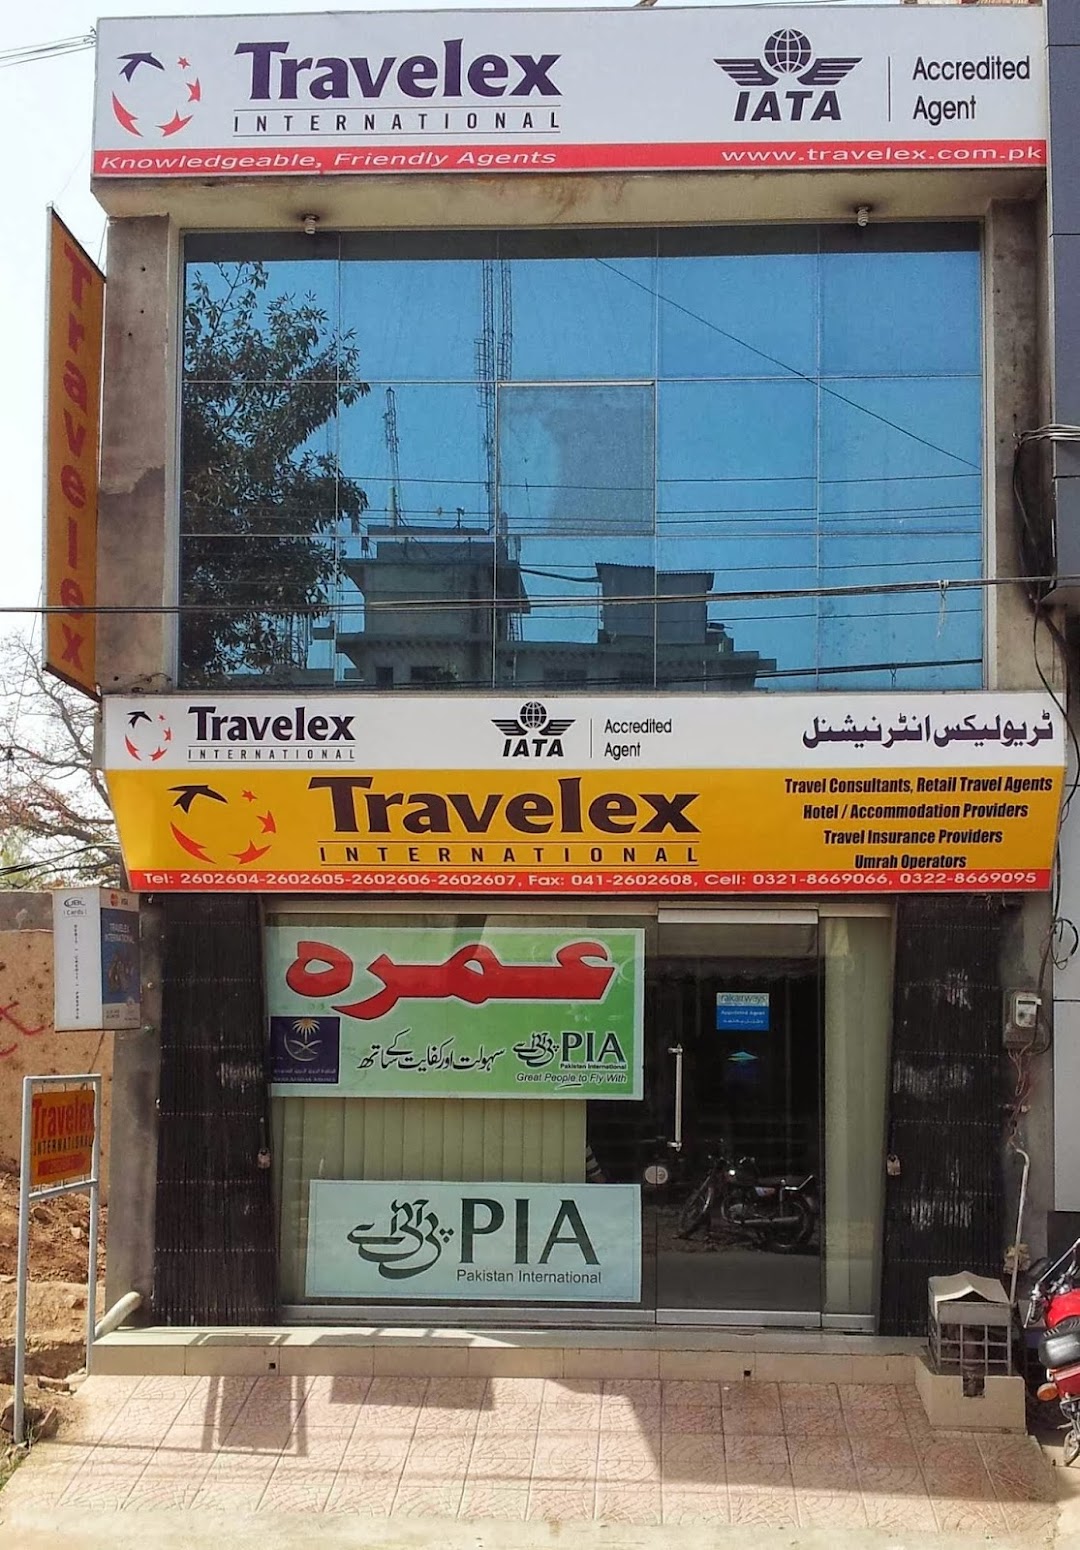 Travelex International